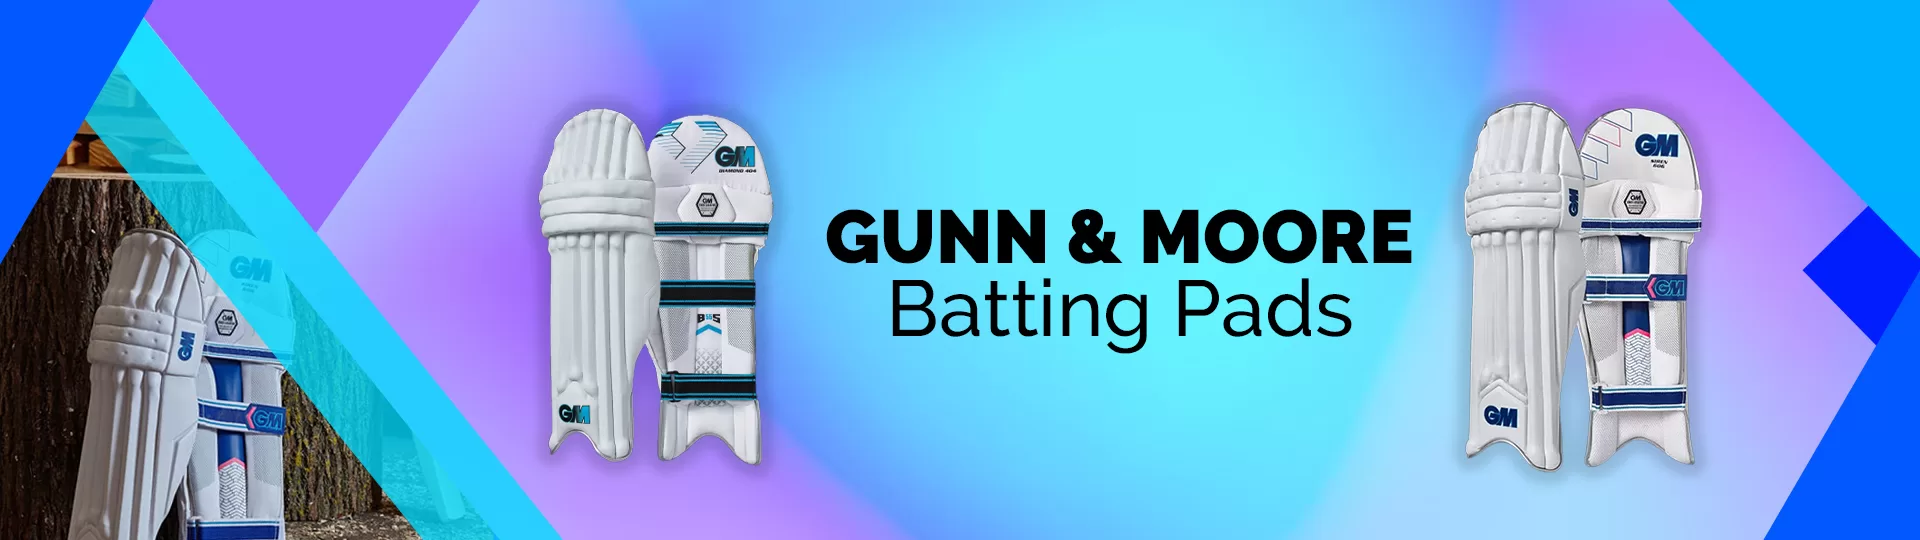 Gunn & Moore Batting Pads